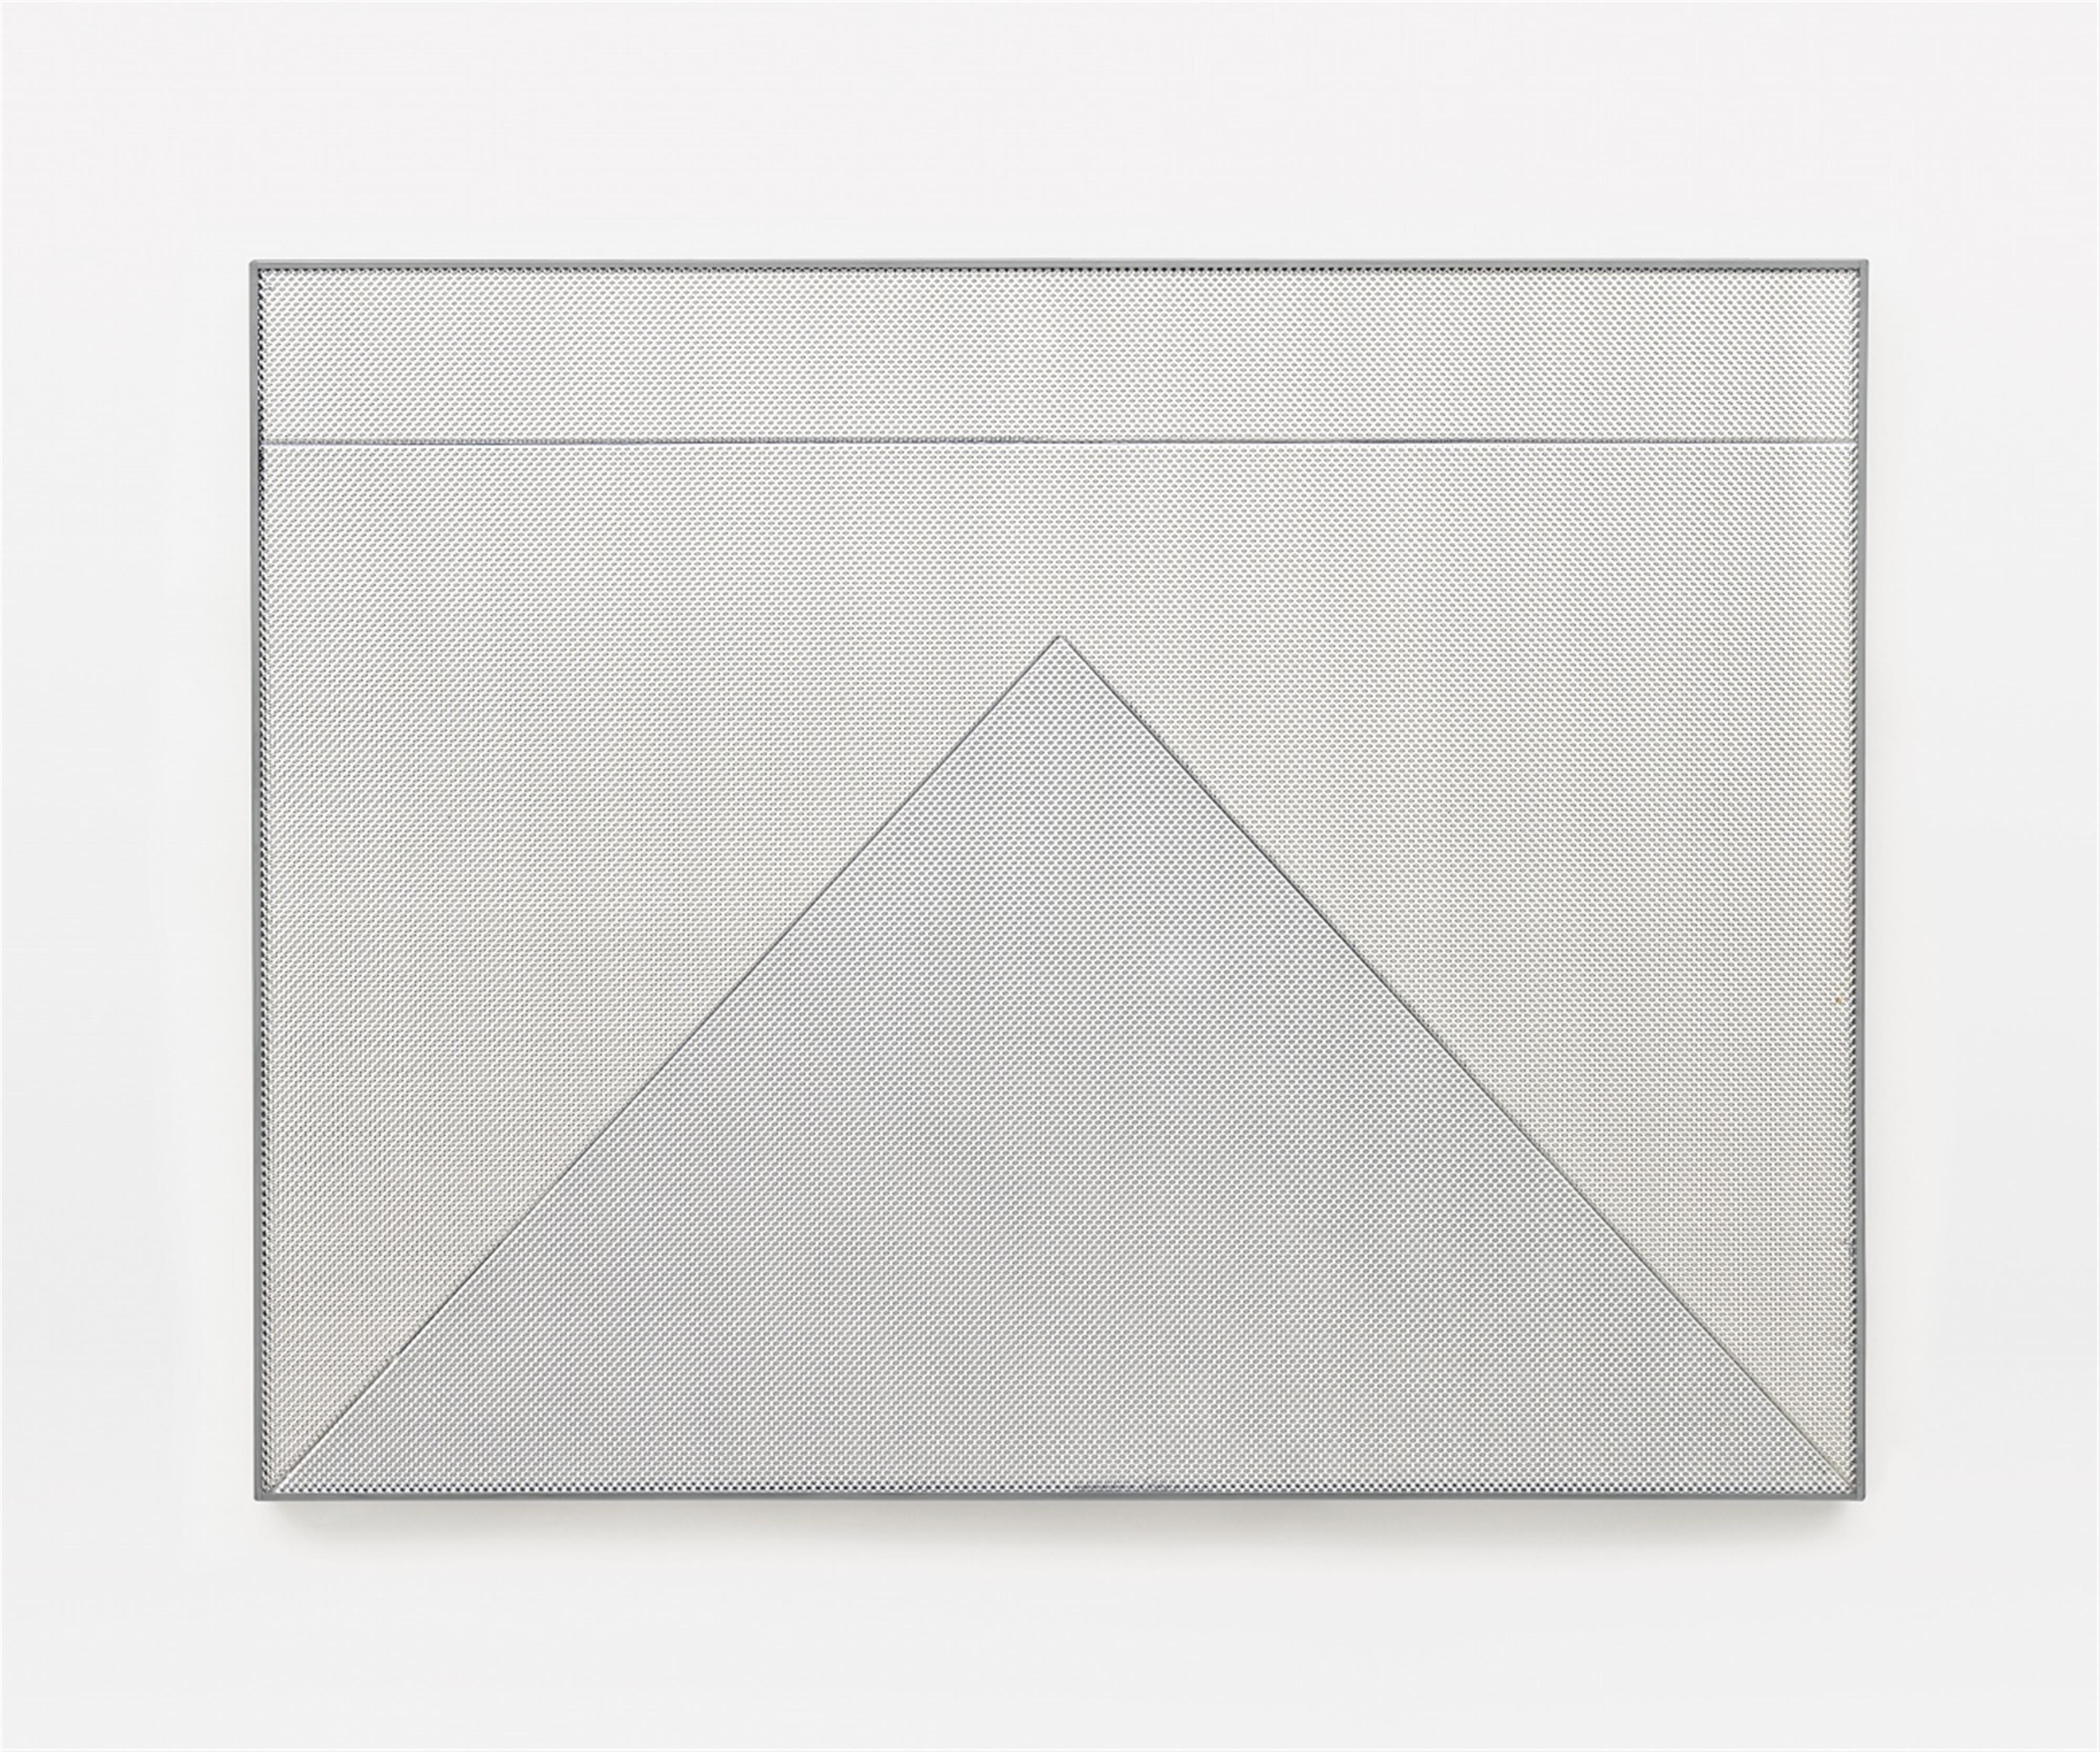 Heinz Mack - Pyramide + Horizont - image-1